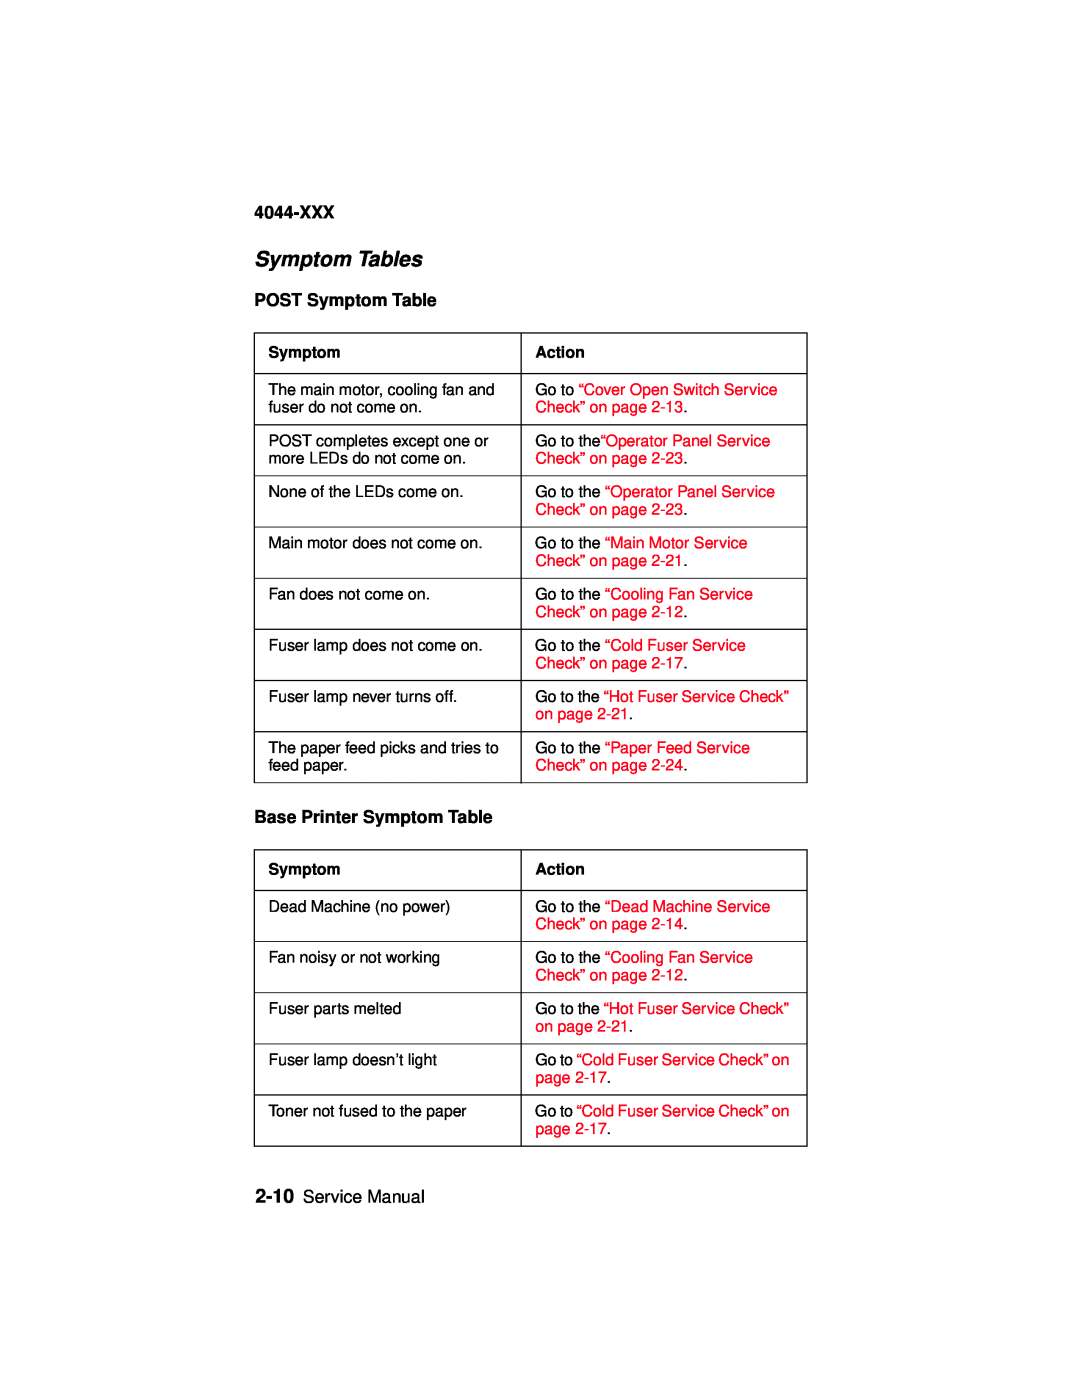 Lexmark 4044-XXX, E310 manual Symptom Tables, POST Symptom Table, Base Printer Symptom Table, Action 